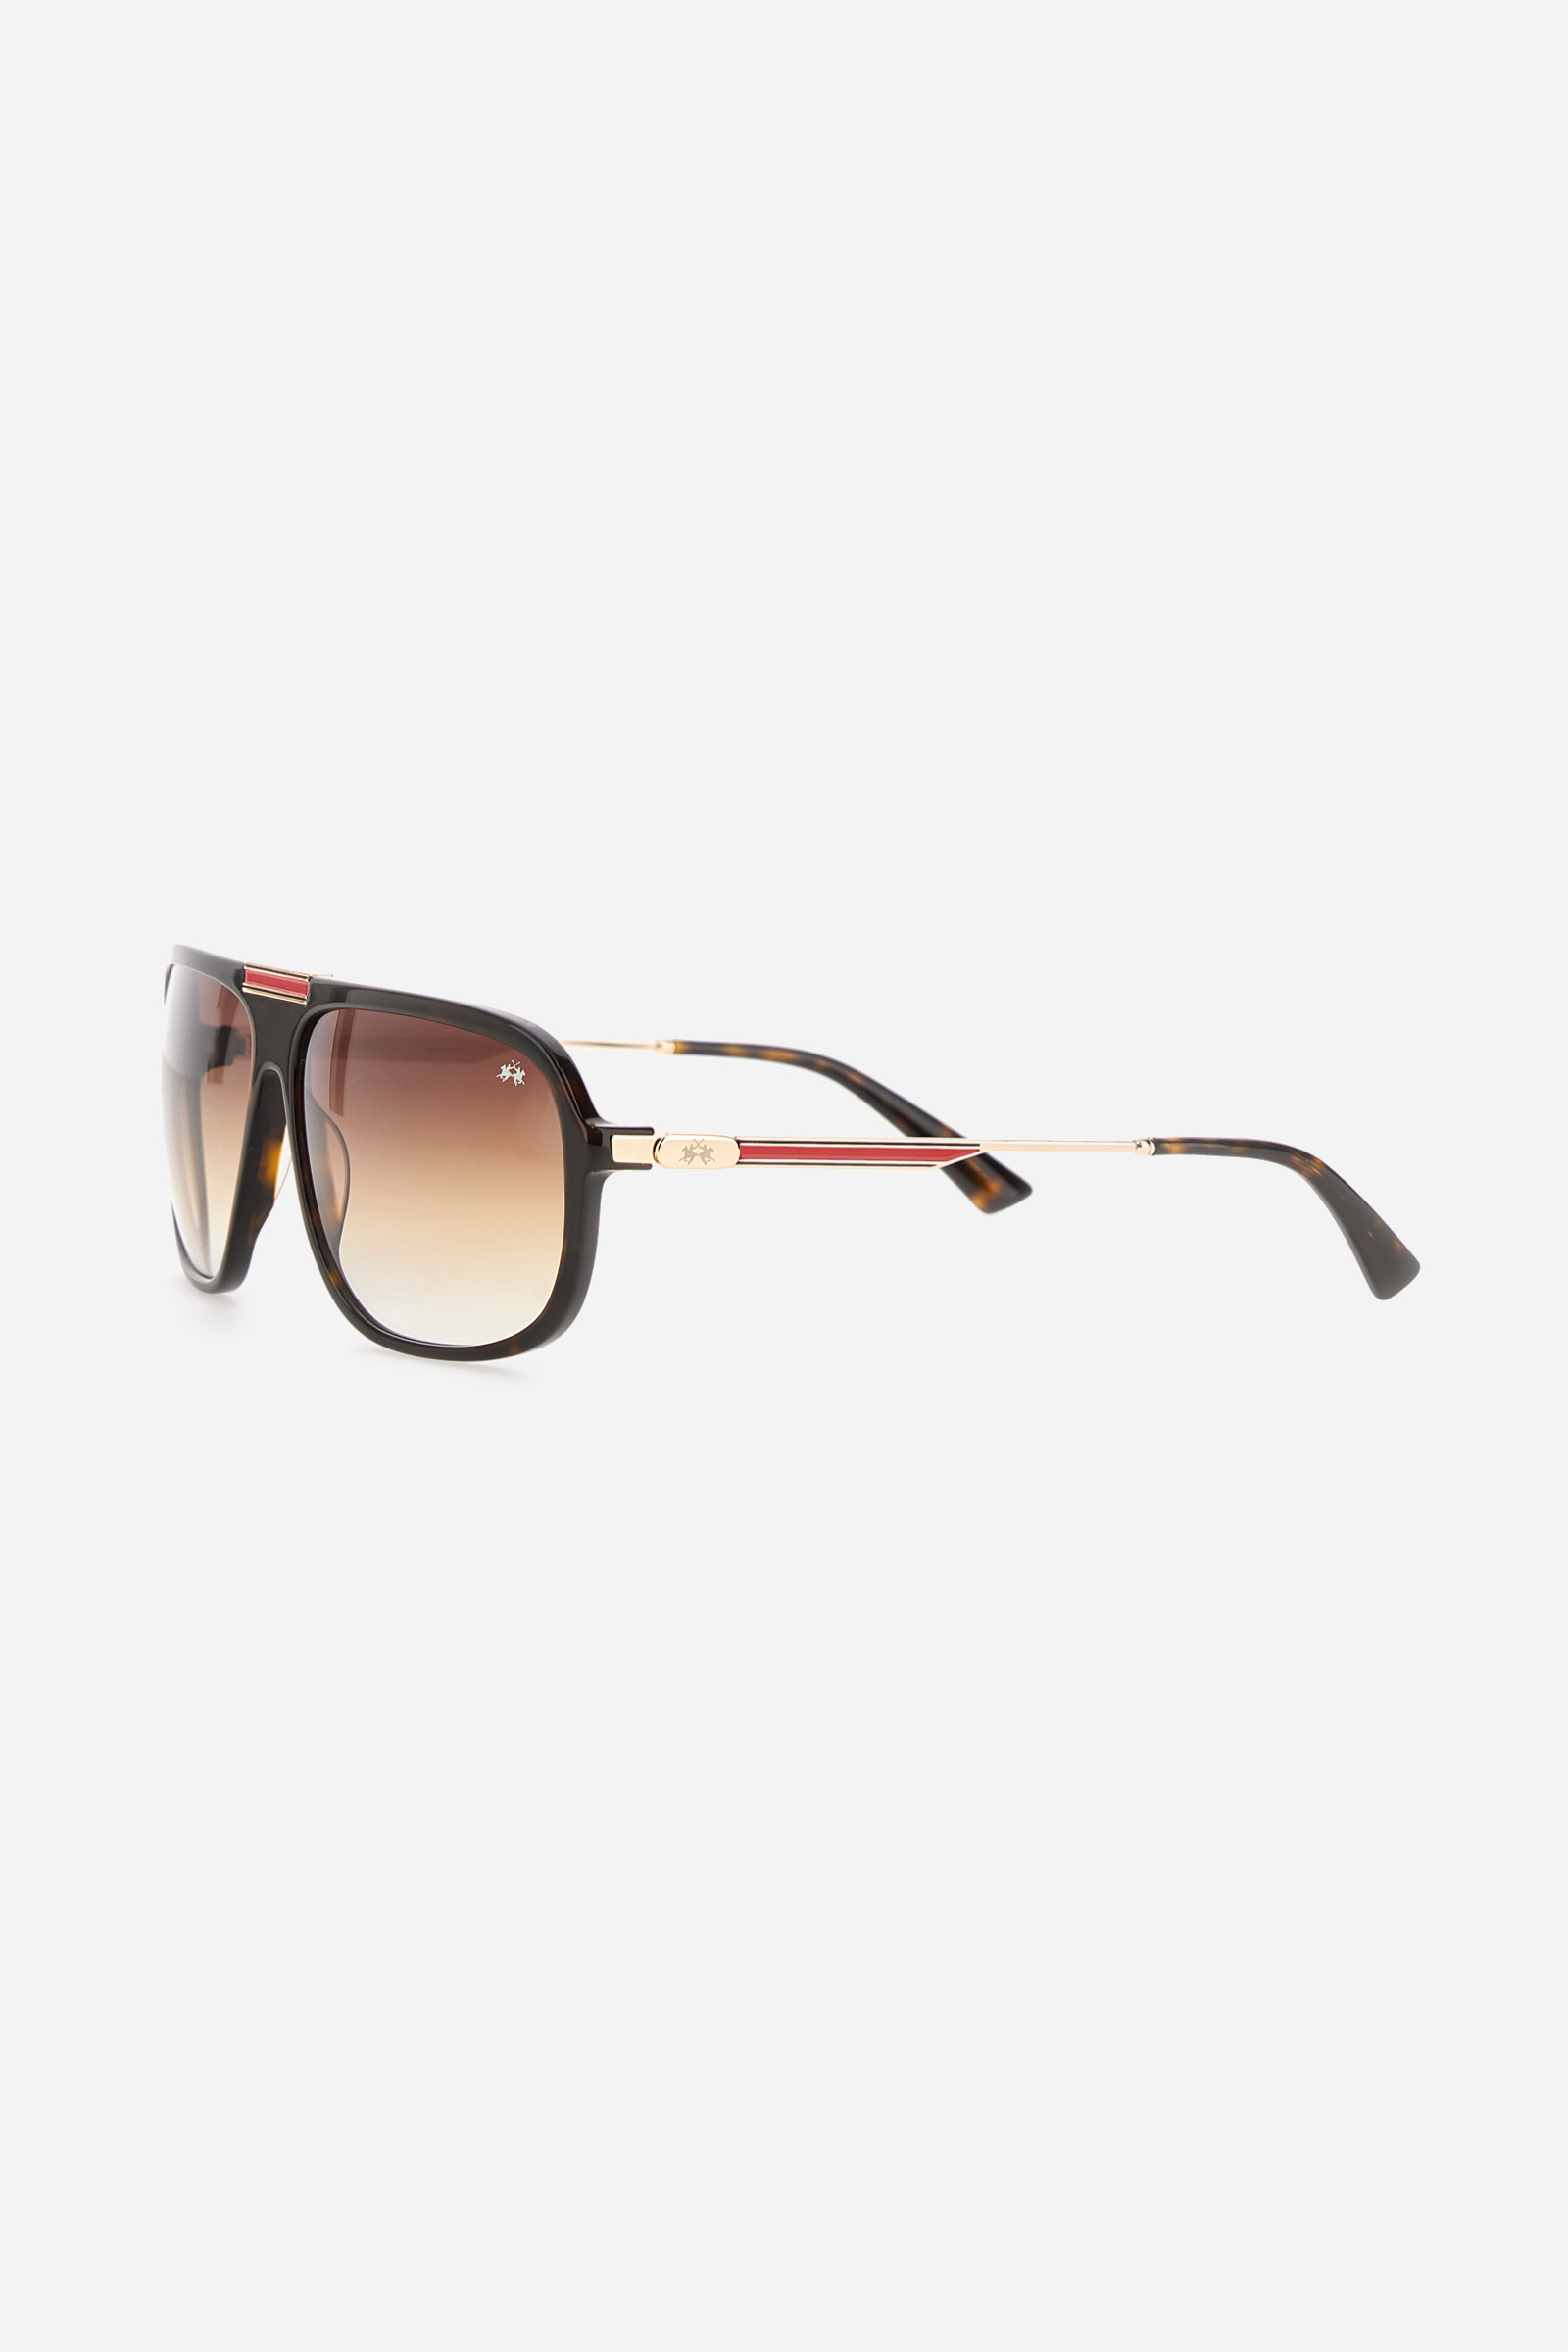 Sunglasses aviator La Avana style Martina Online | Dark Shop